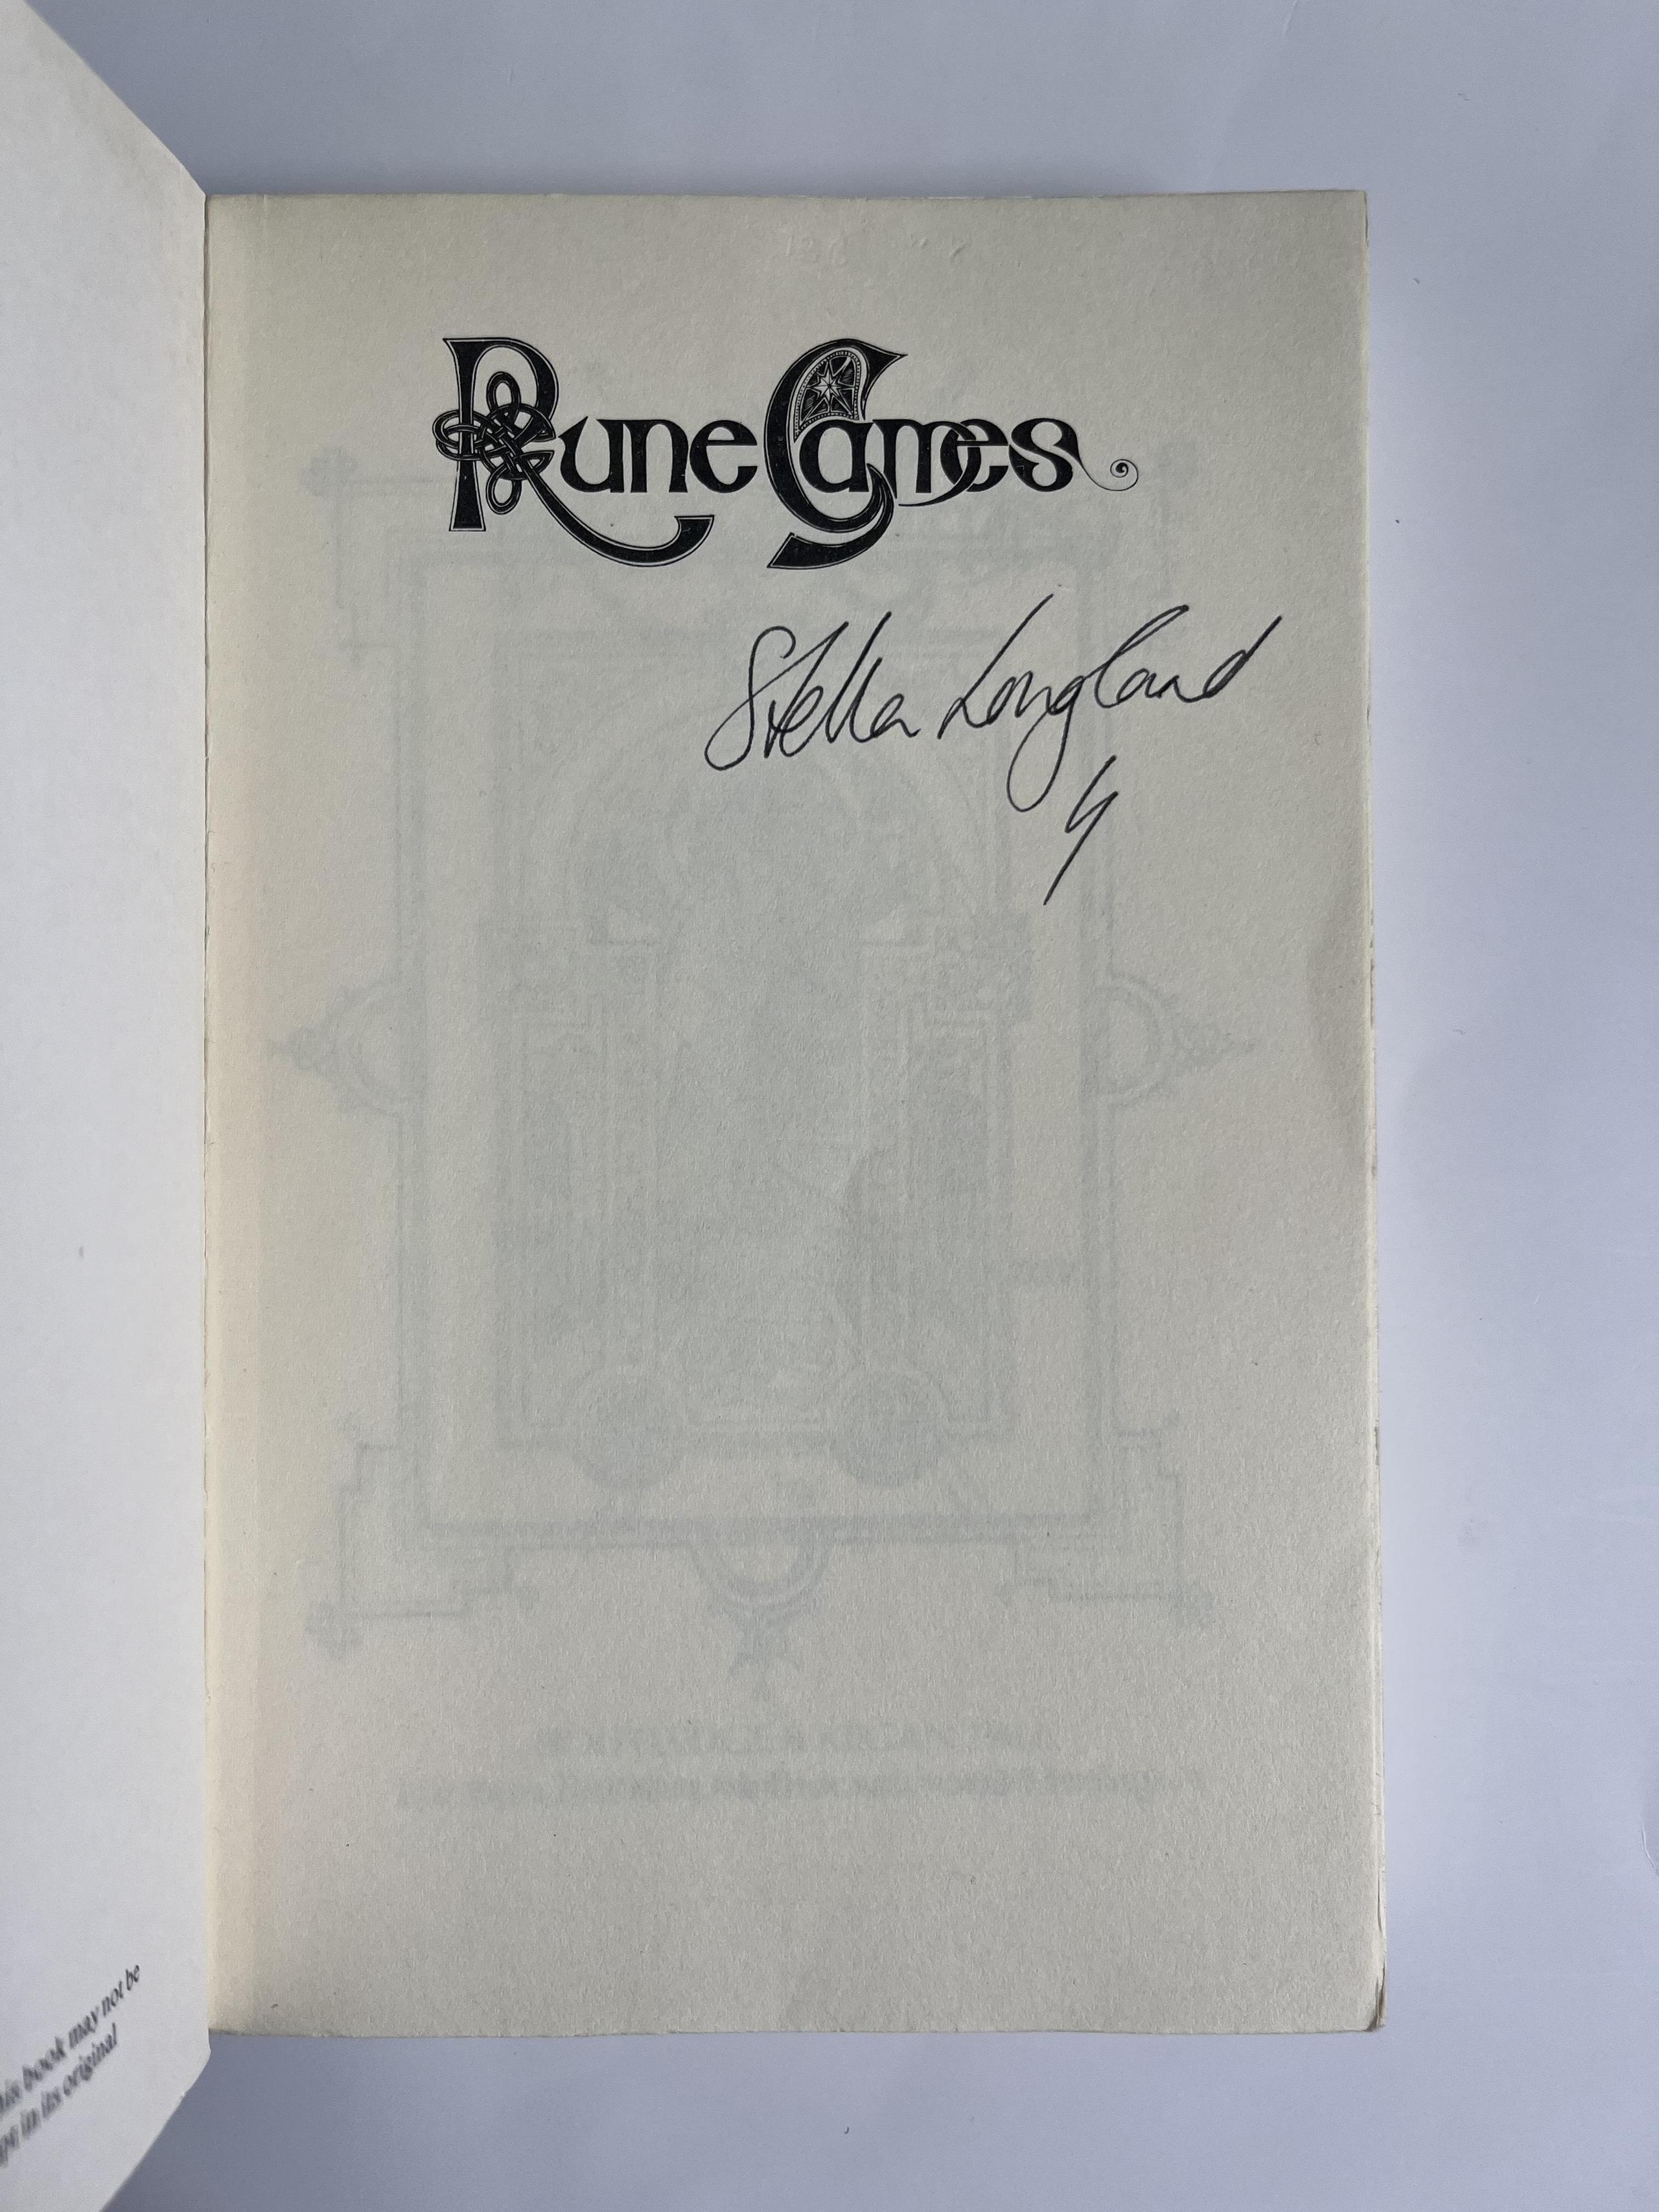 Rune Games by Marijane Osburn & Stella Longland, Signed